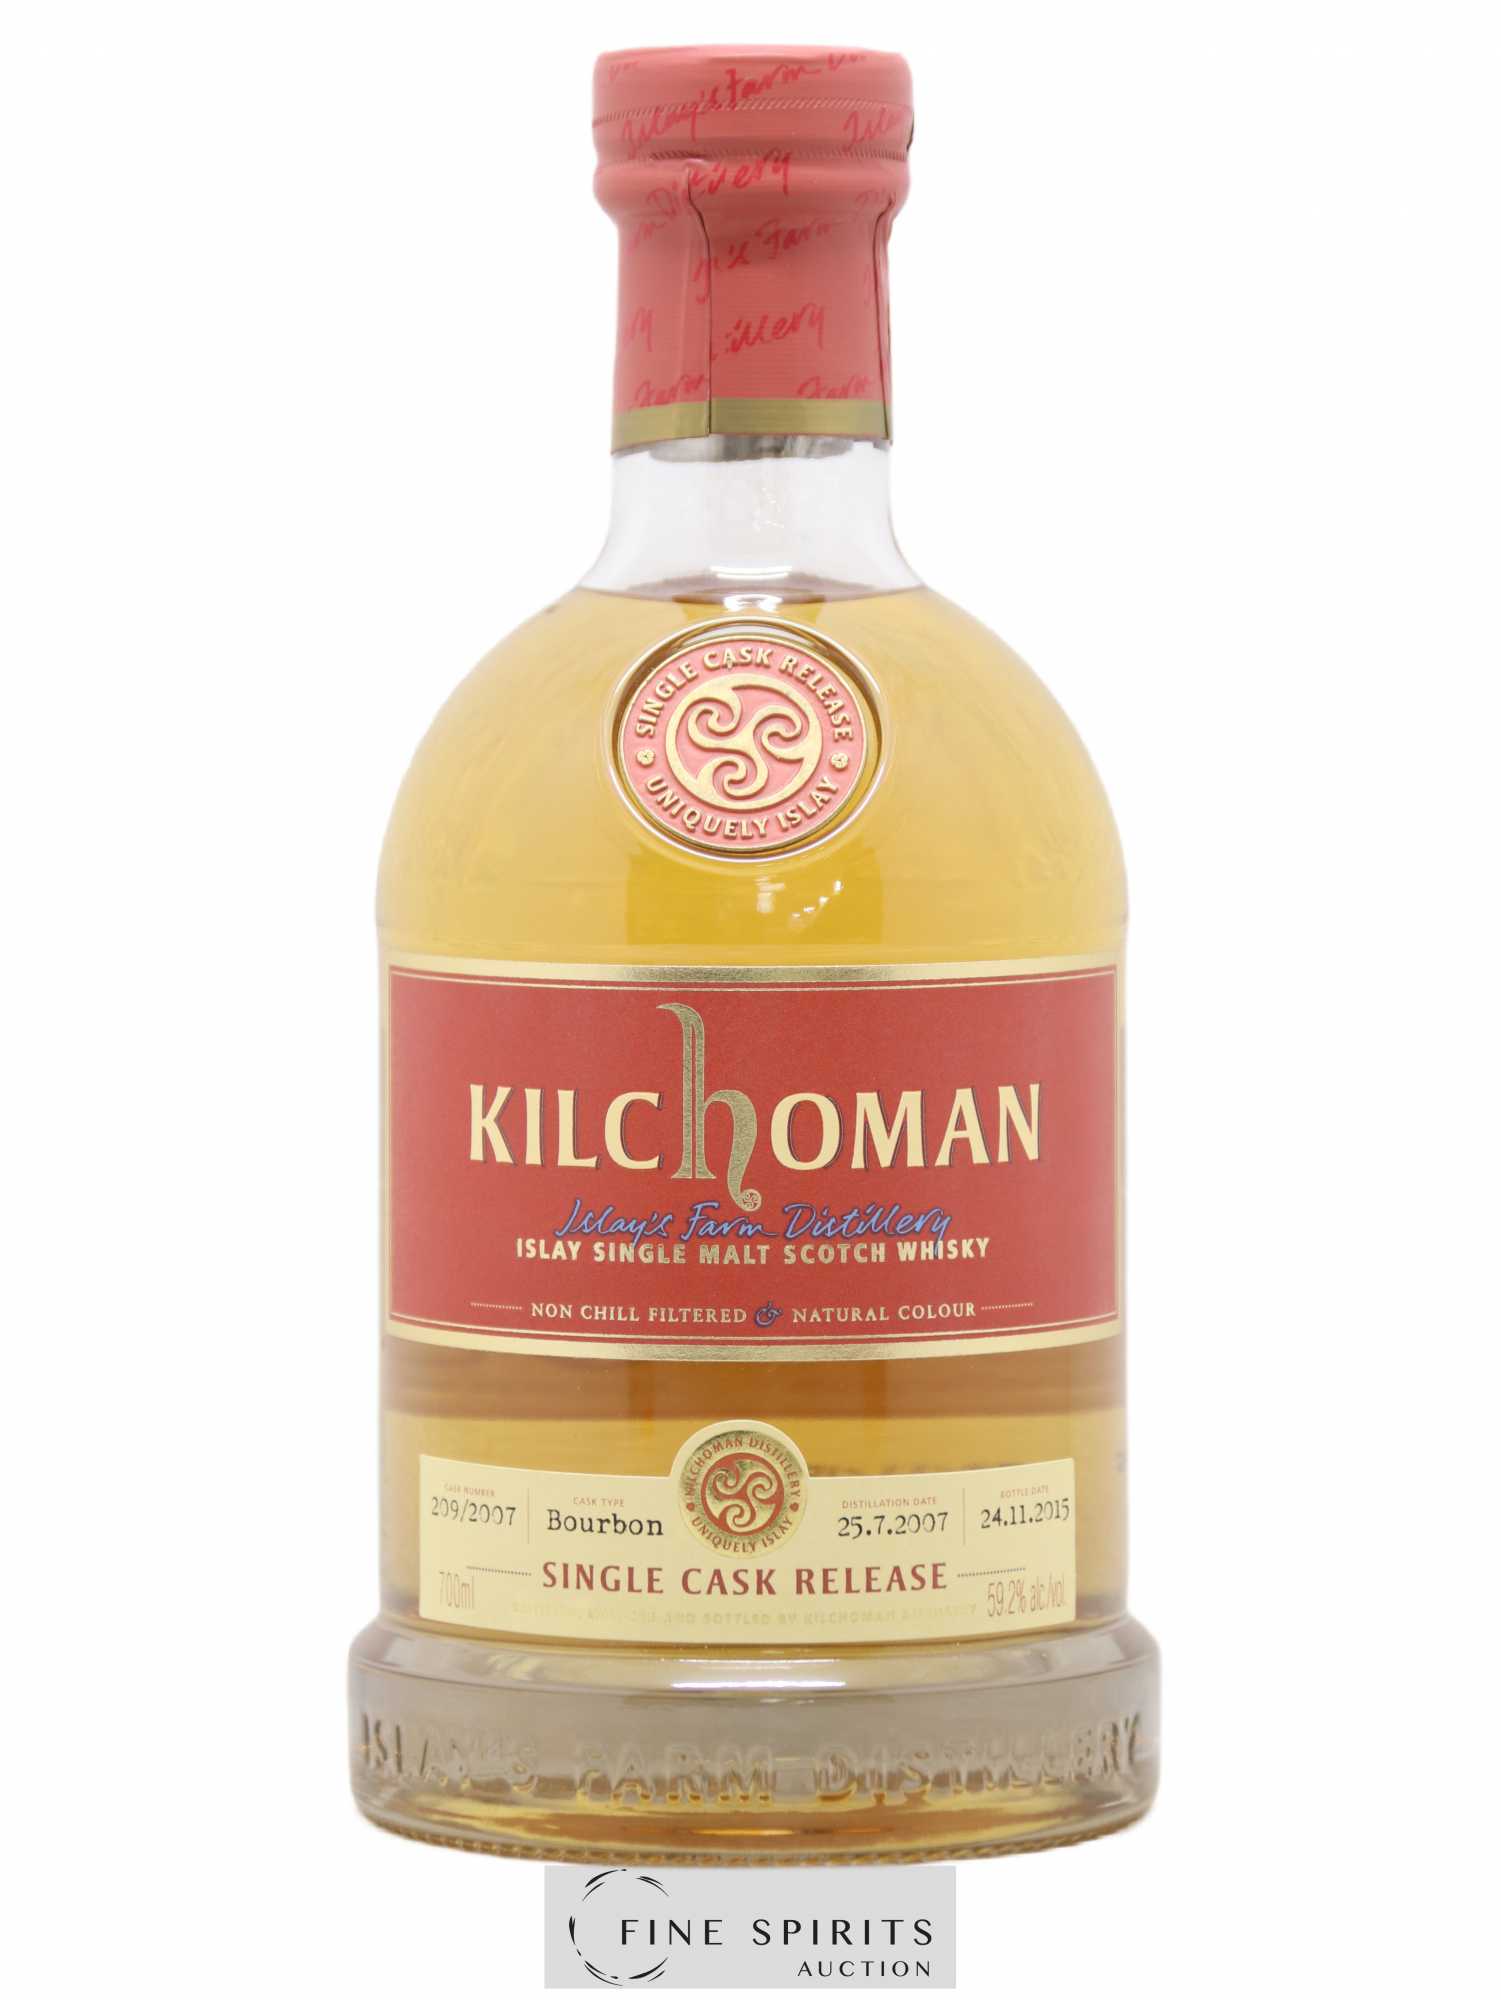 Kilchoman 2007 Of. Bourbon Cask n°2092007 - One of 241 - bottled 2015 